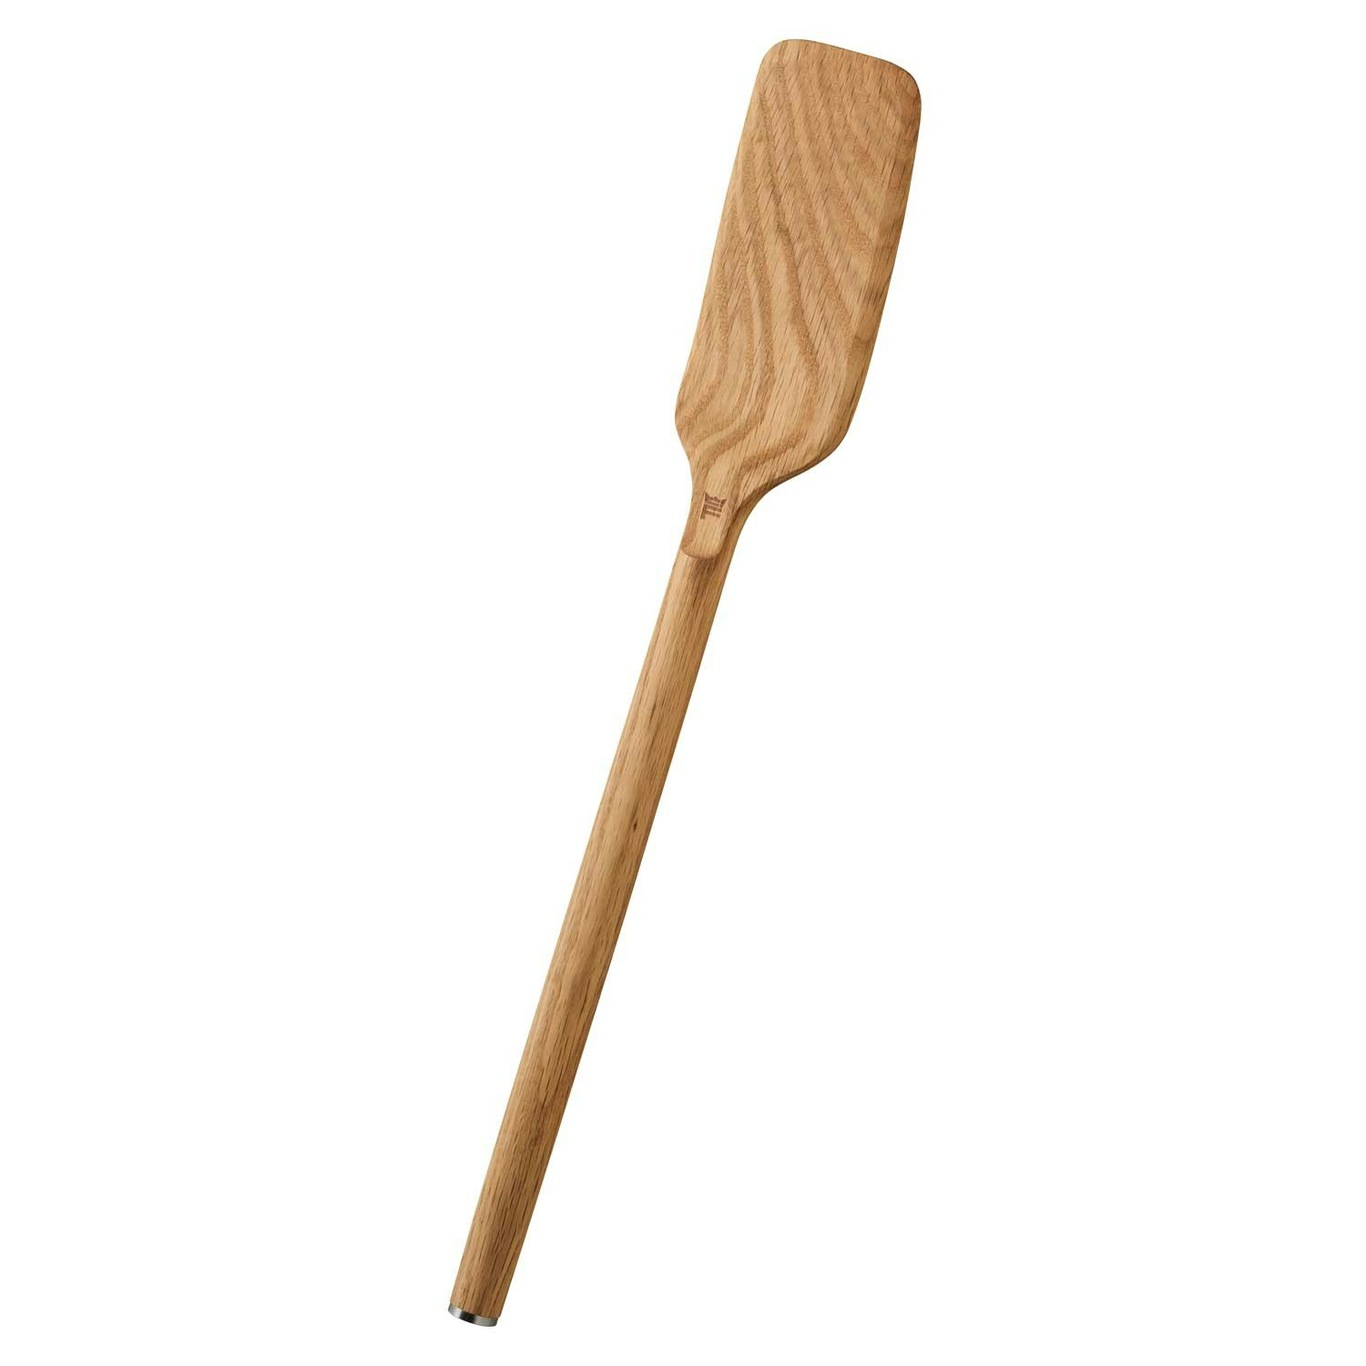 https://royaldesign.com/image/10/fiskars-norden-spatula-30-cm-2?w=800&quality=80